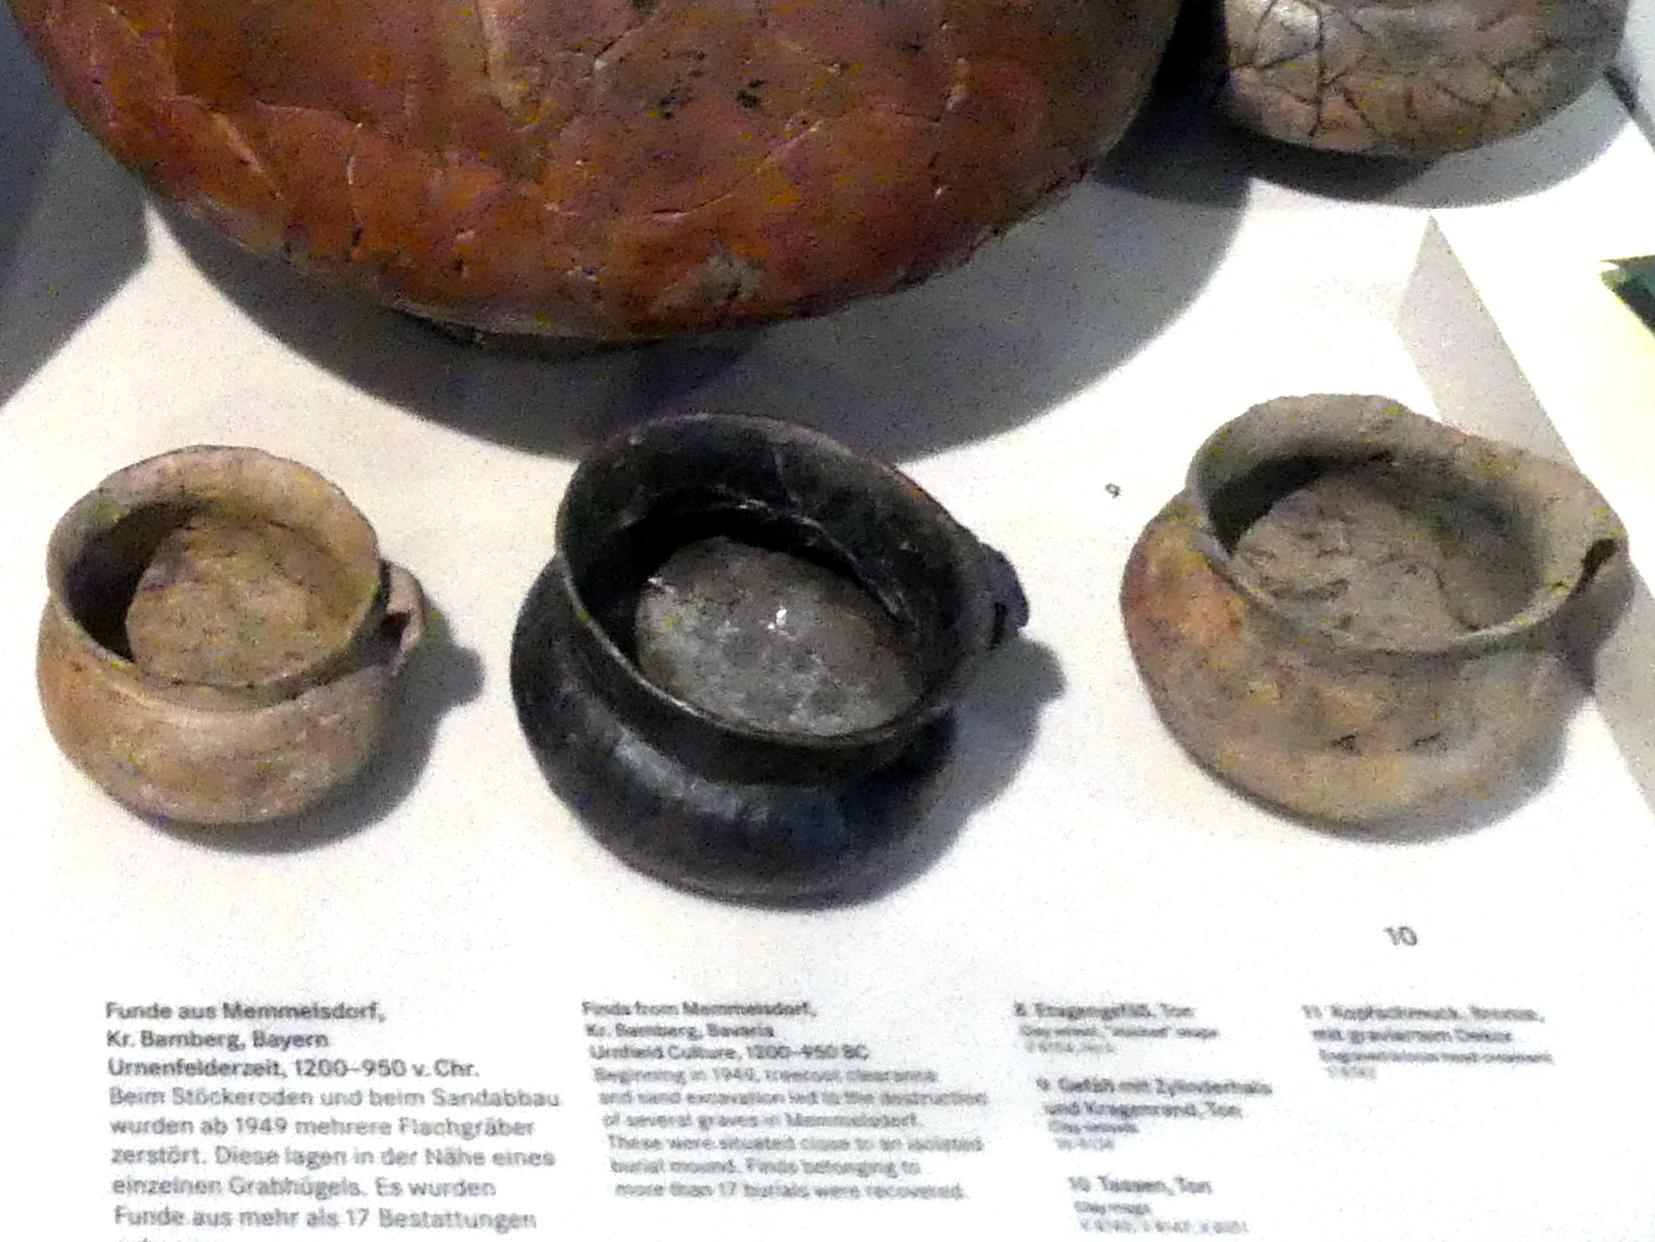 Tassen, Urnenfelderzeit, 1400 - 700 v. Chr., 1200 - 950 v. Chr.